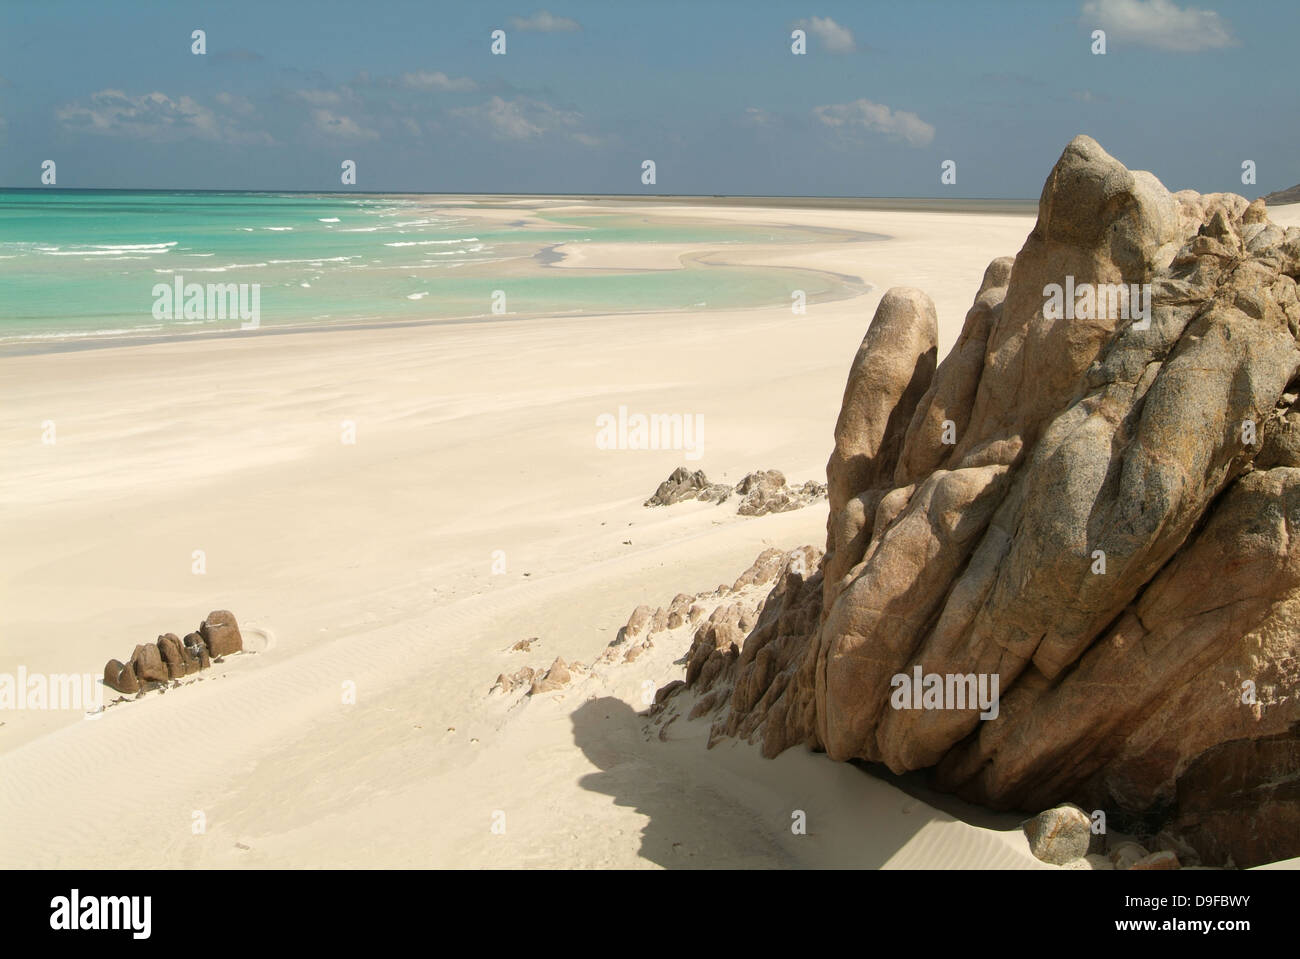 The beach of Qalansiya on Socotra island, Yemen Stock Photo